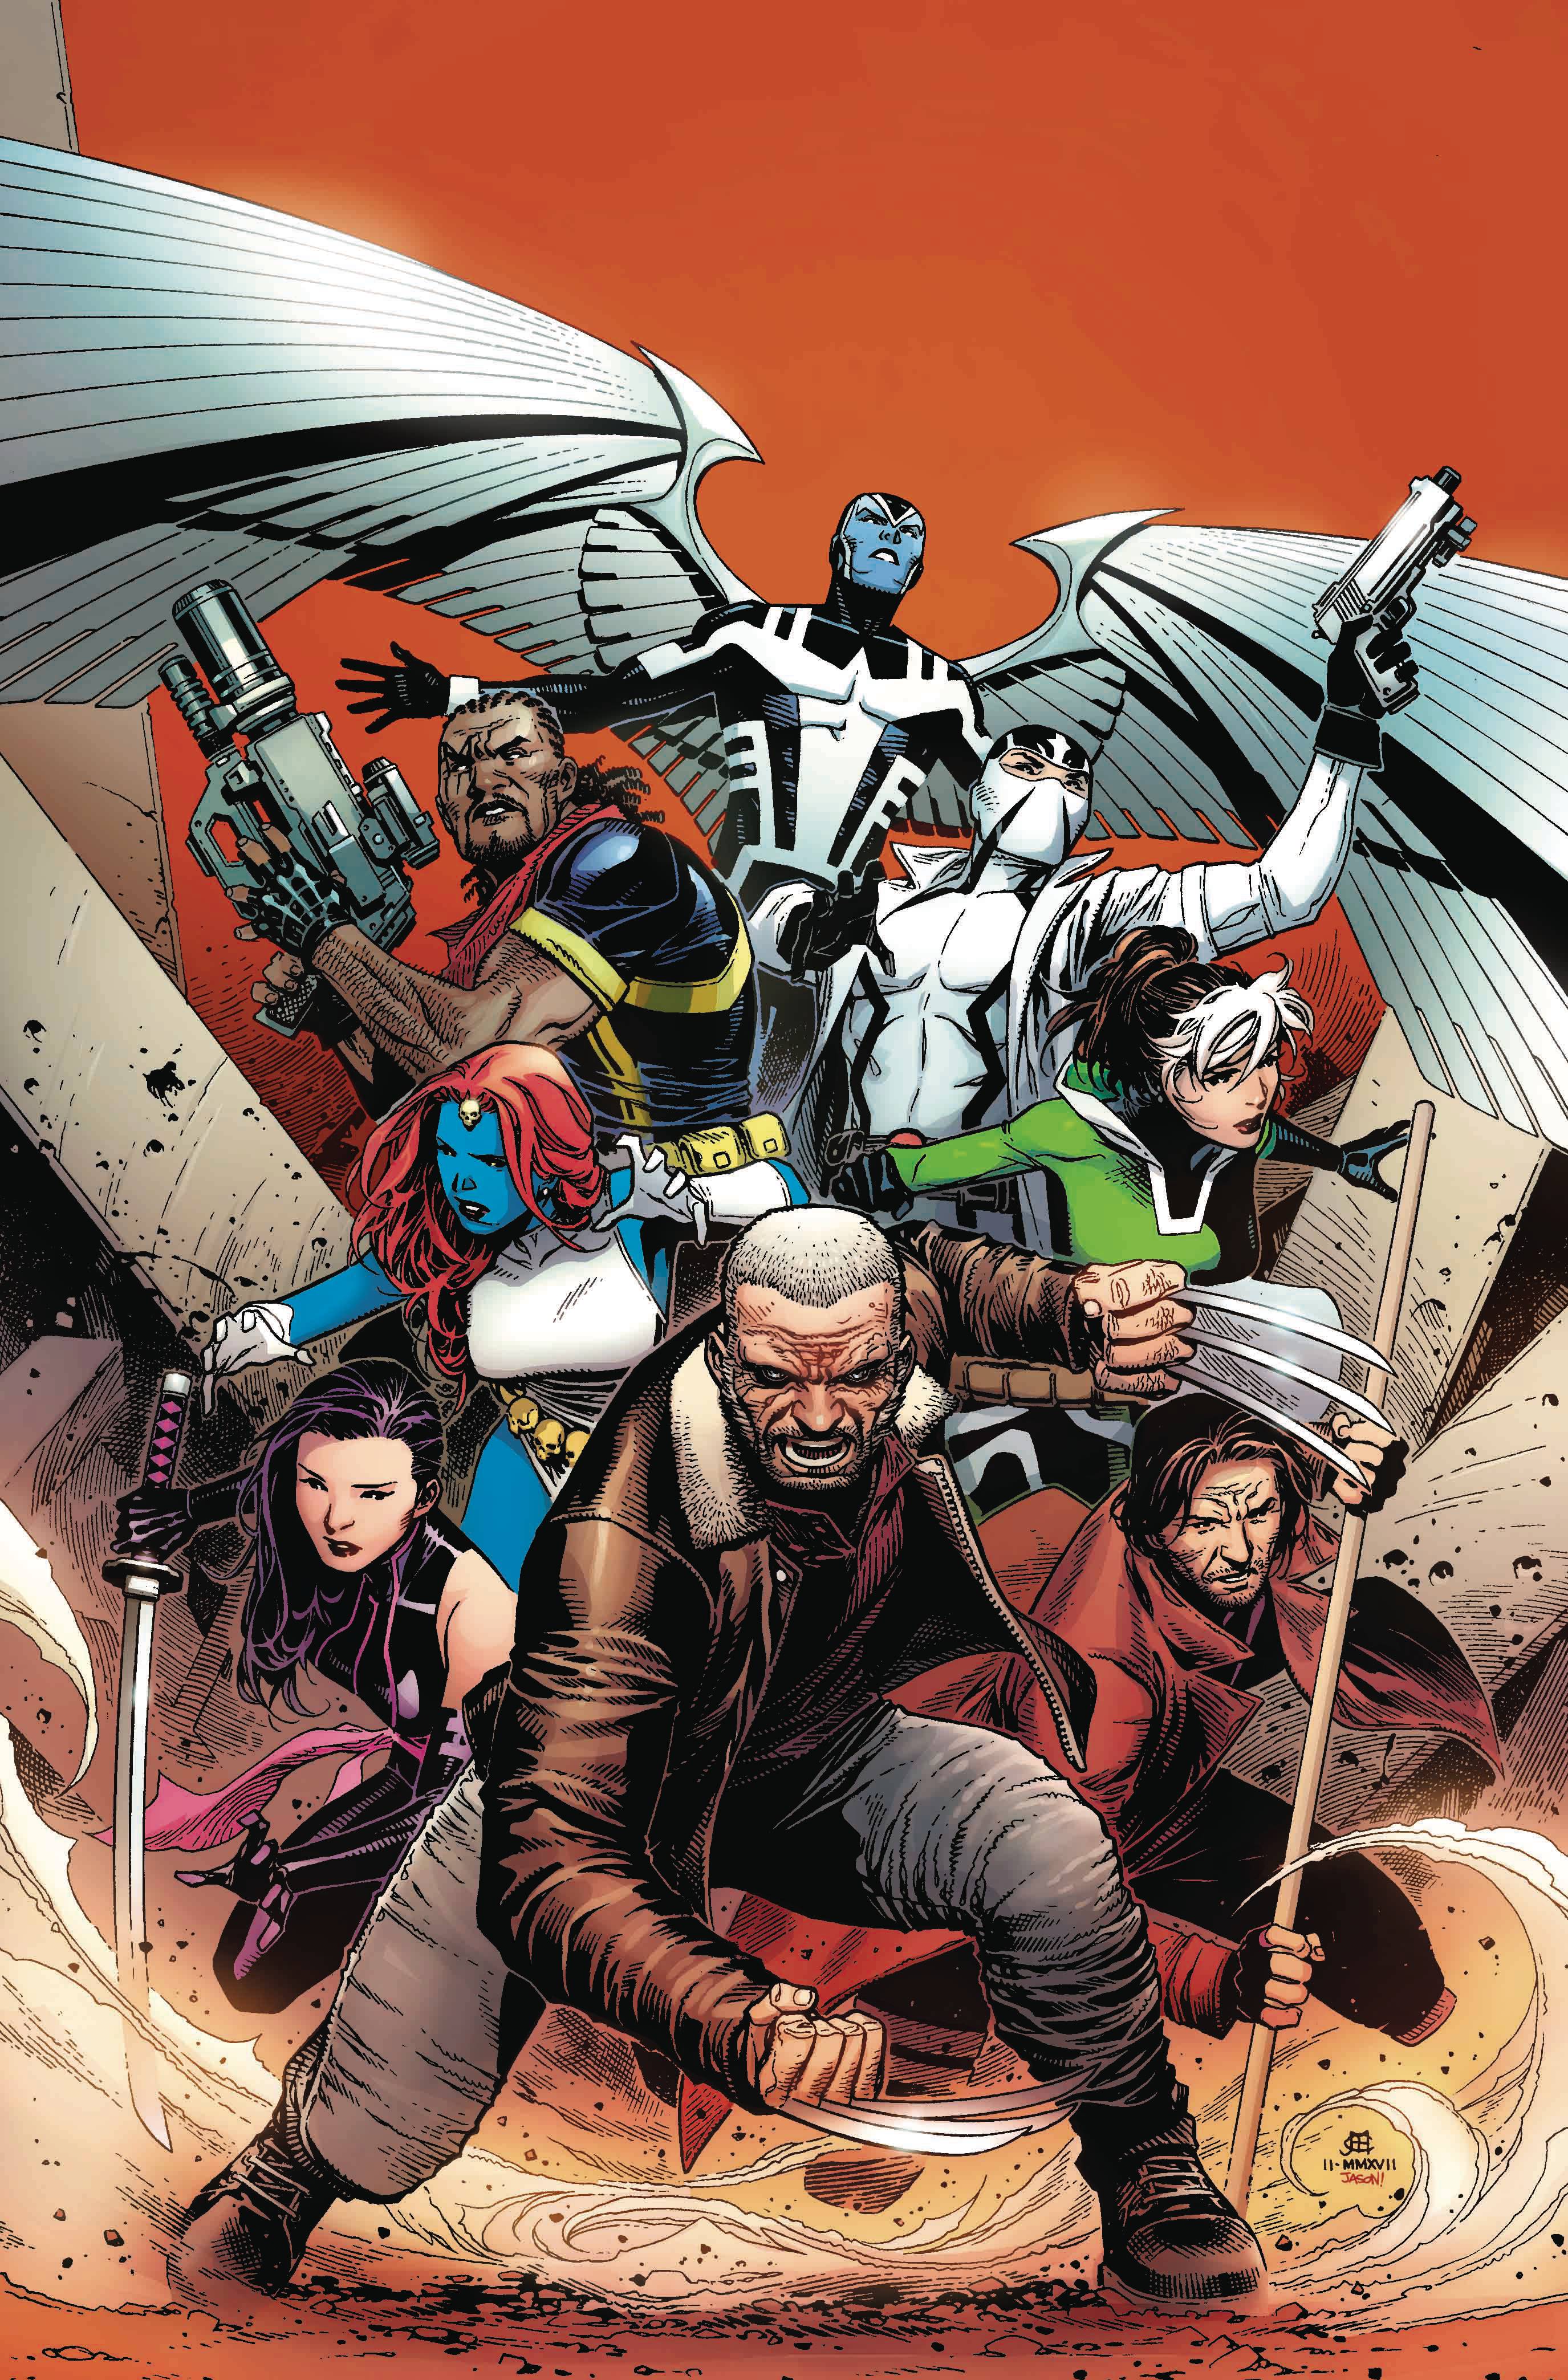 Astonishing X-Men #1 by Cheung Poster